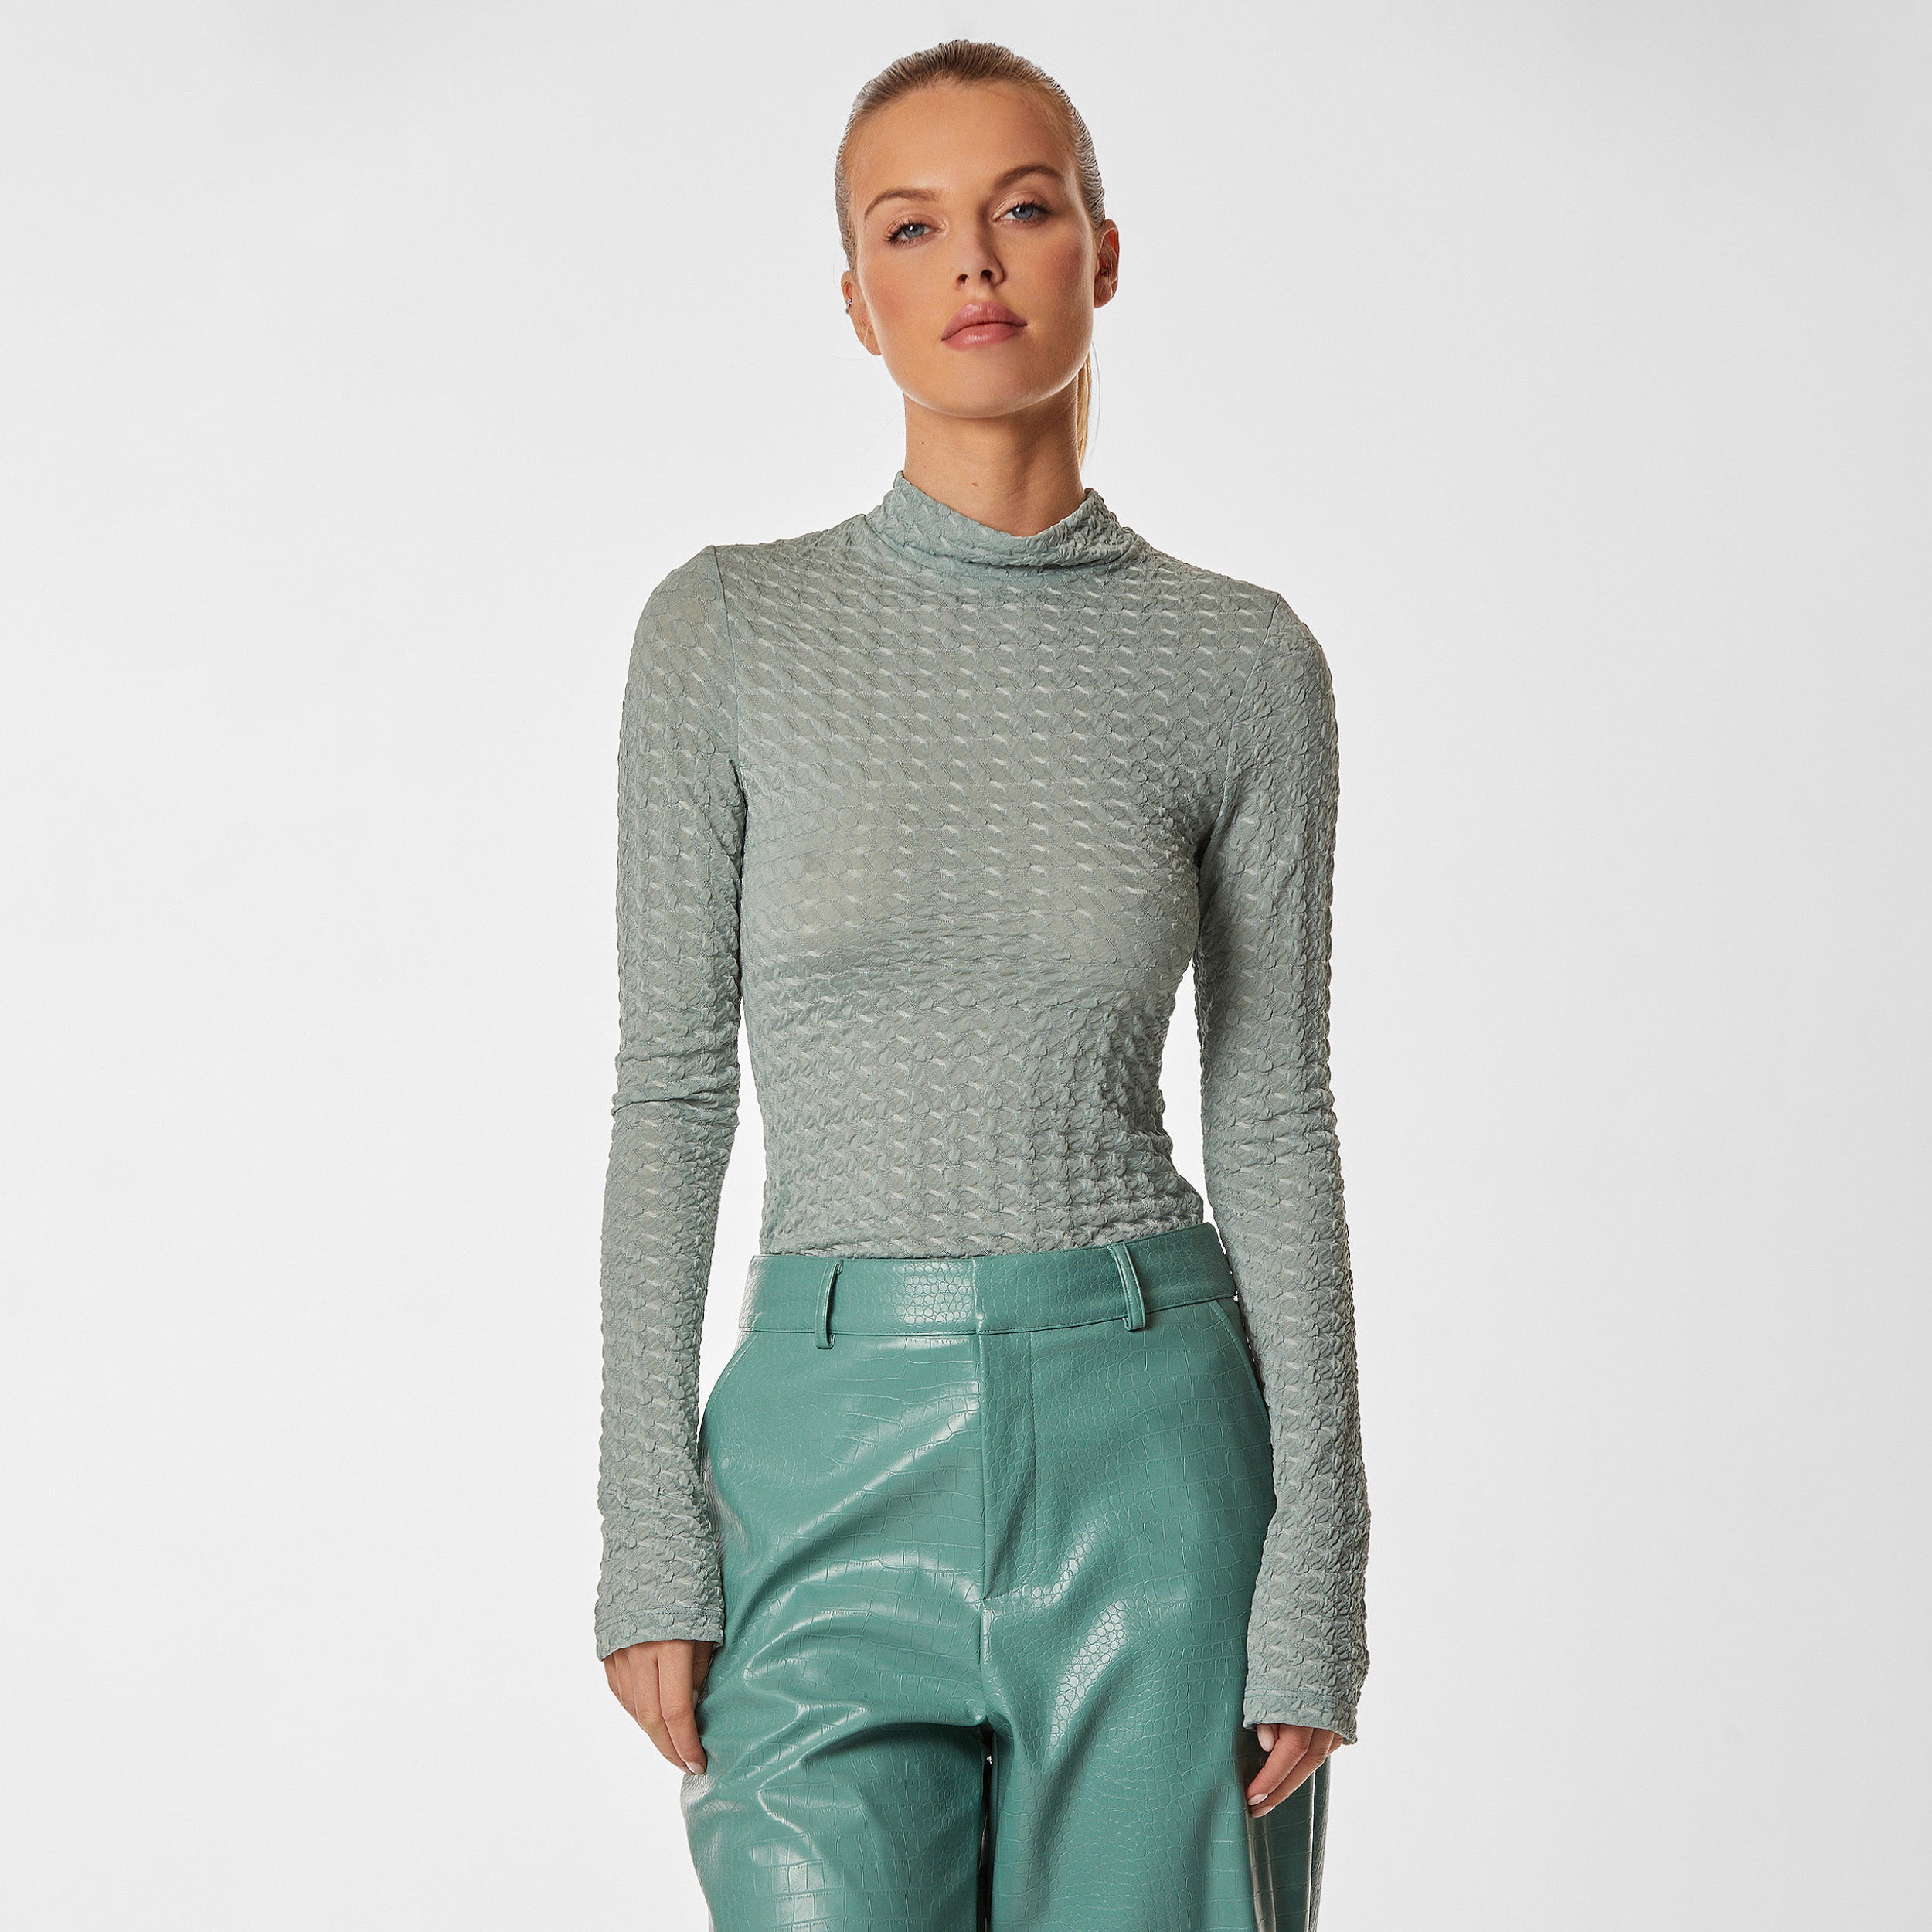 Woman wearing green stretch mesh textured turtleneck sweater